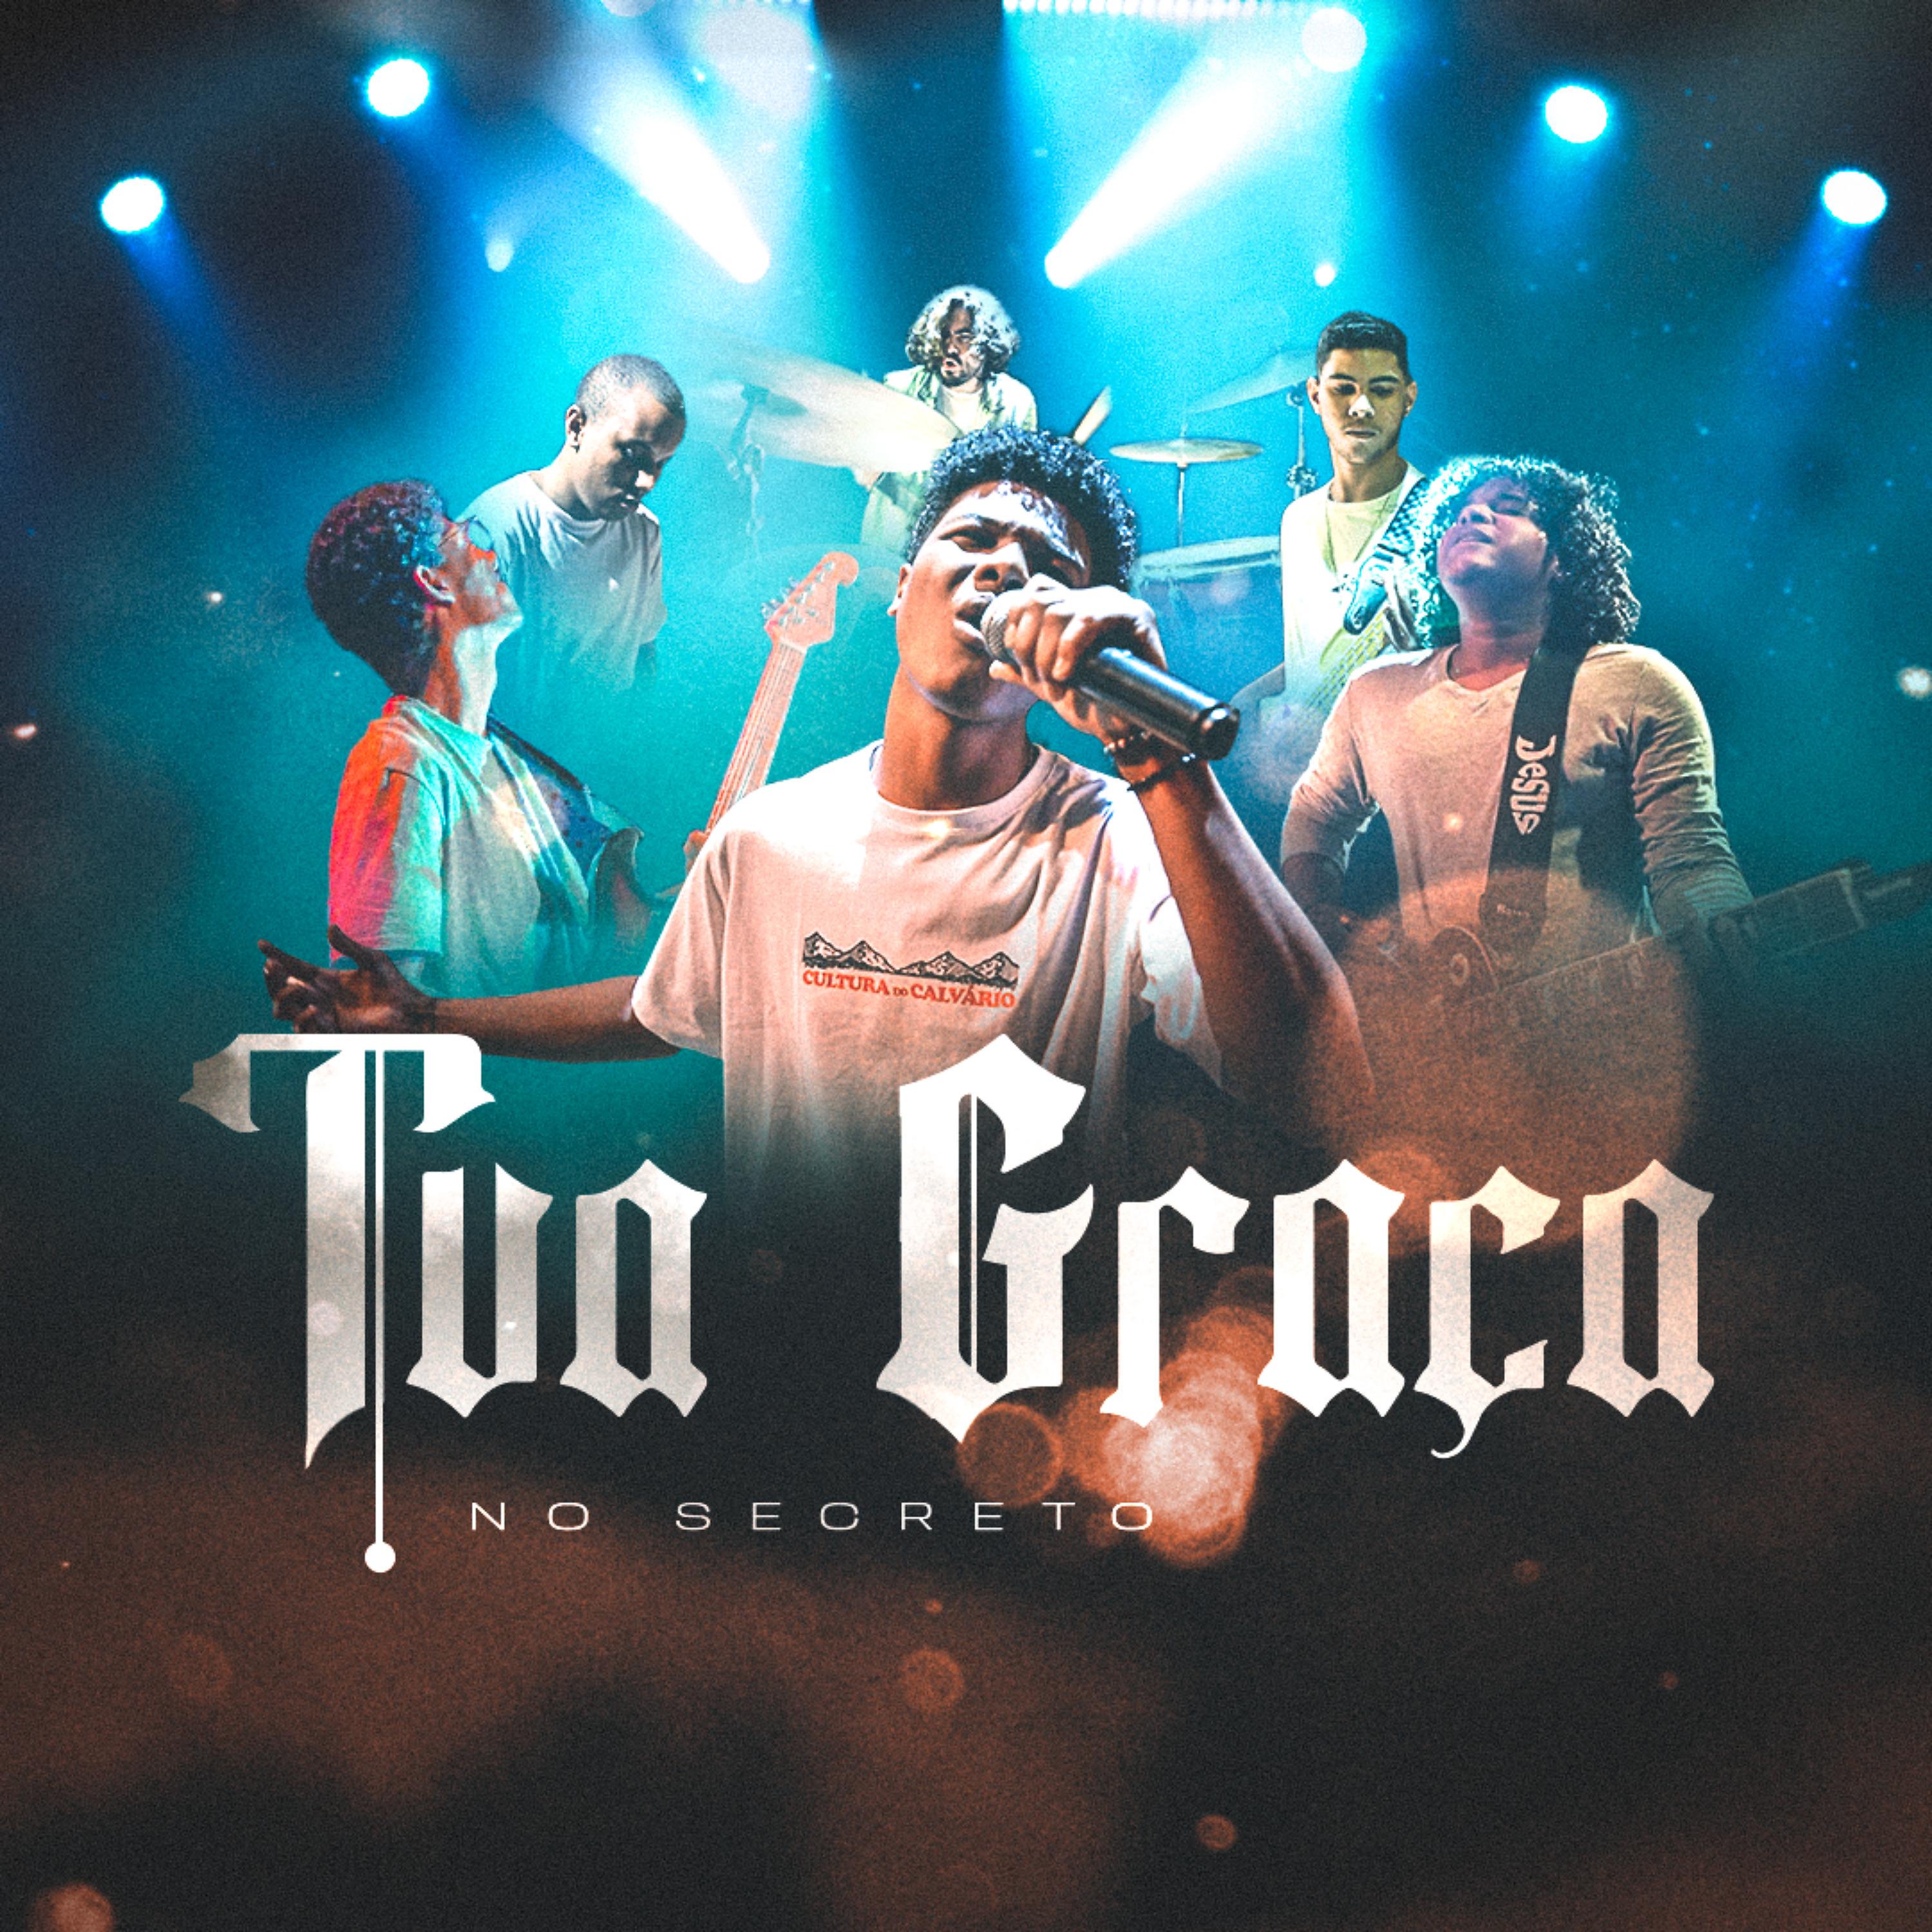 Постер альбома Tua Graça